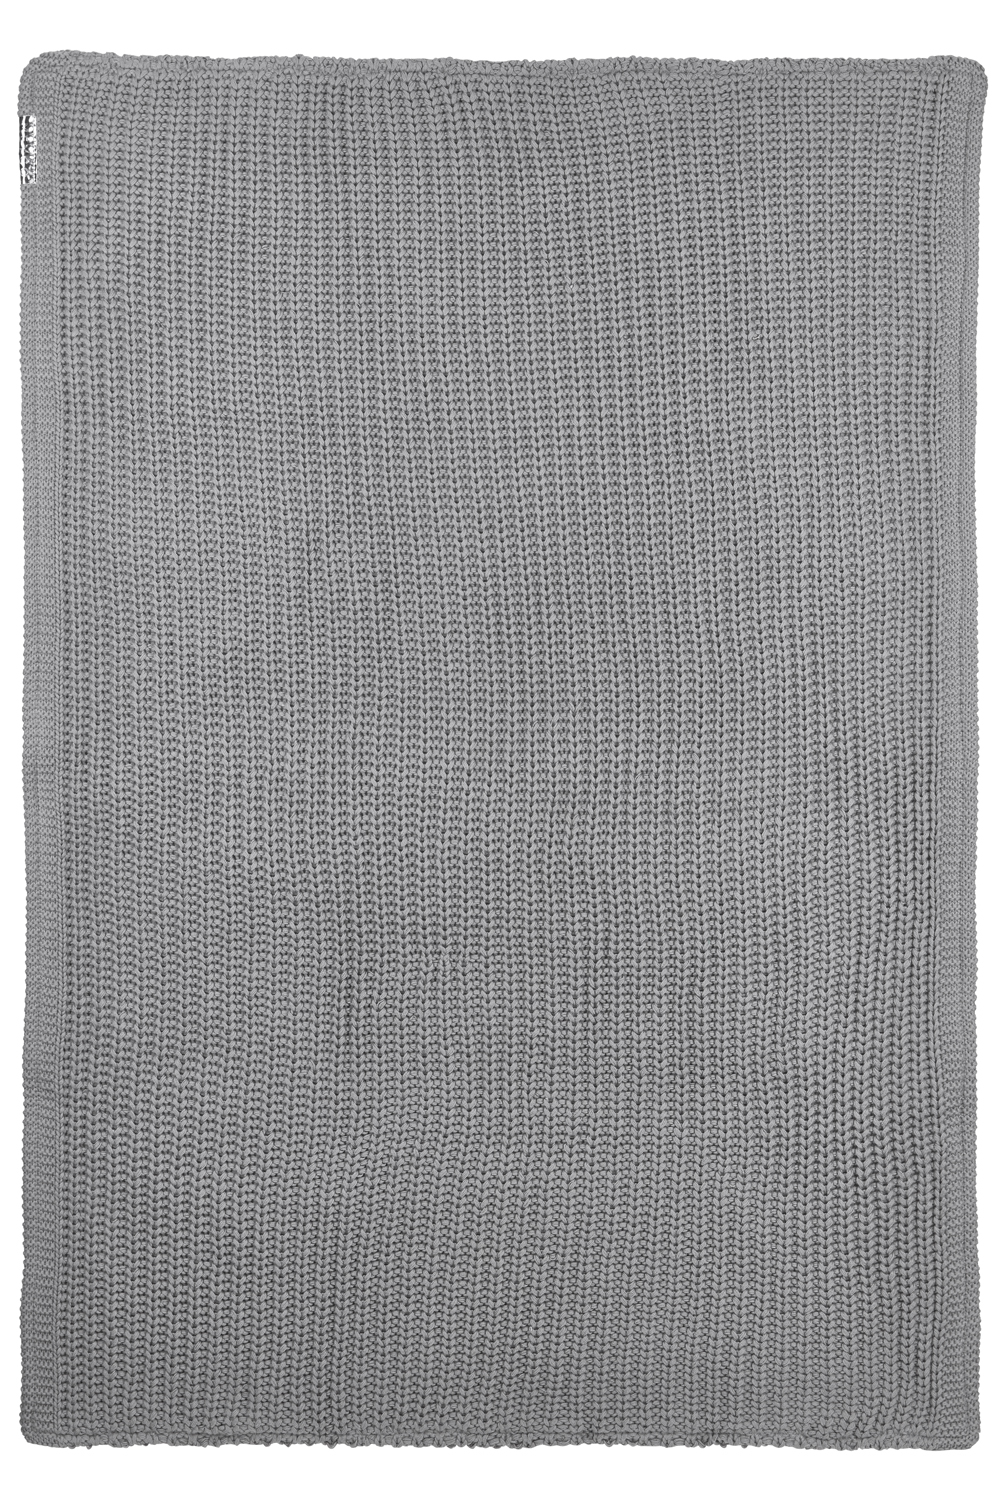 Wiegdeken Herringbone velvet - grey - 75x100cm